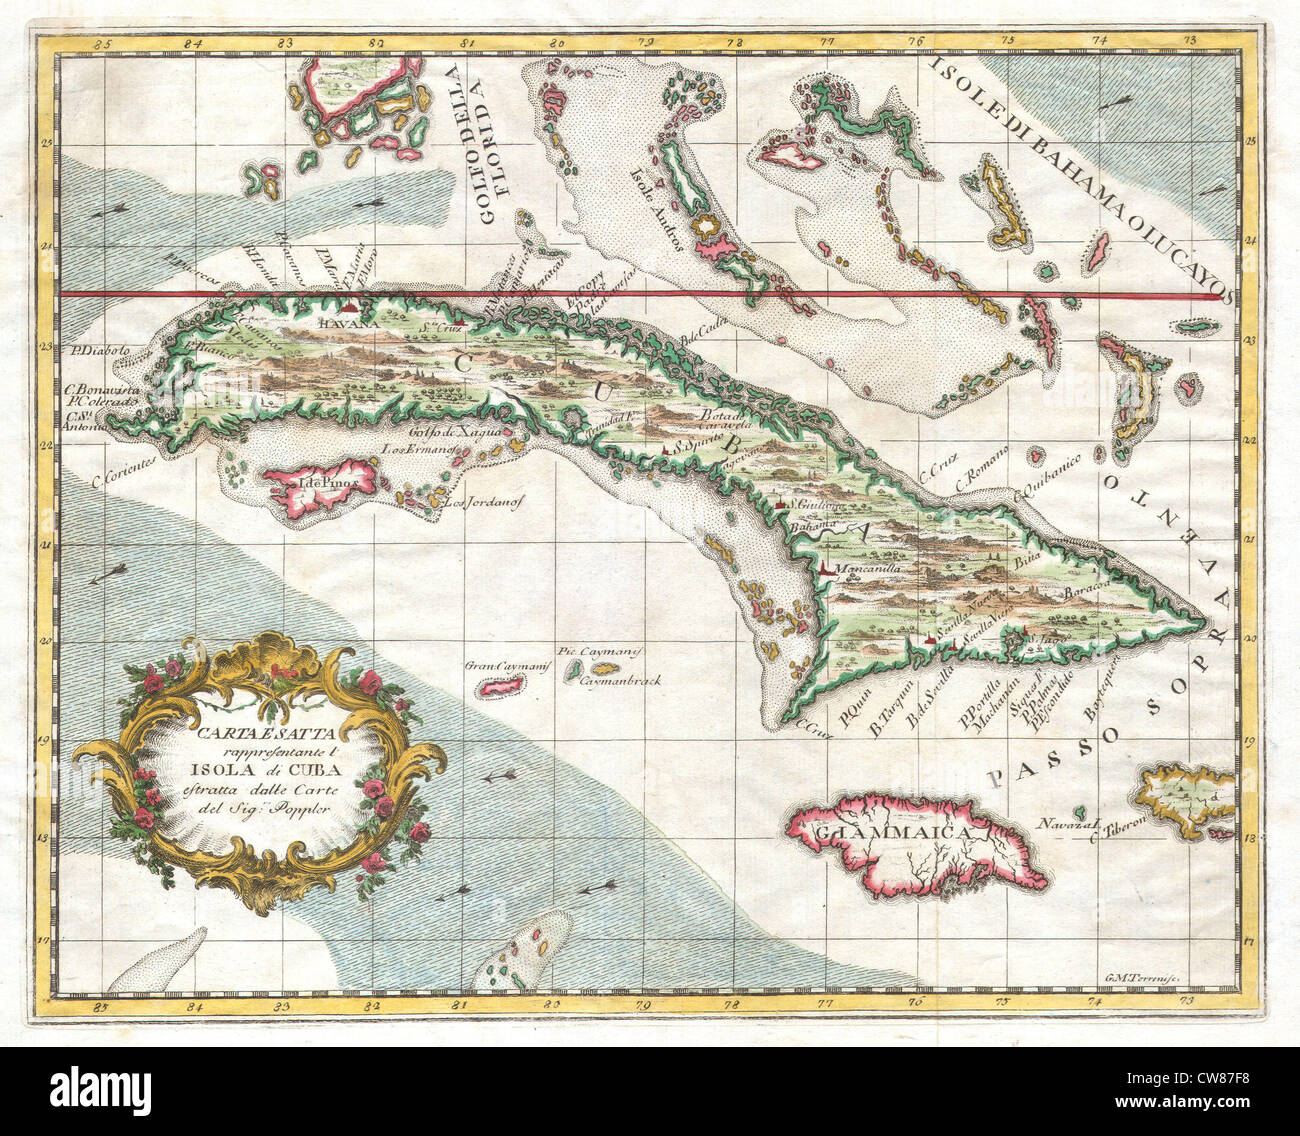 1763 Terreni - Coltellini Karte von Kuba und Jamaika Stockfoto